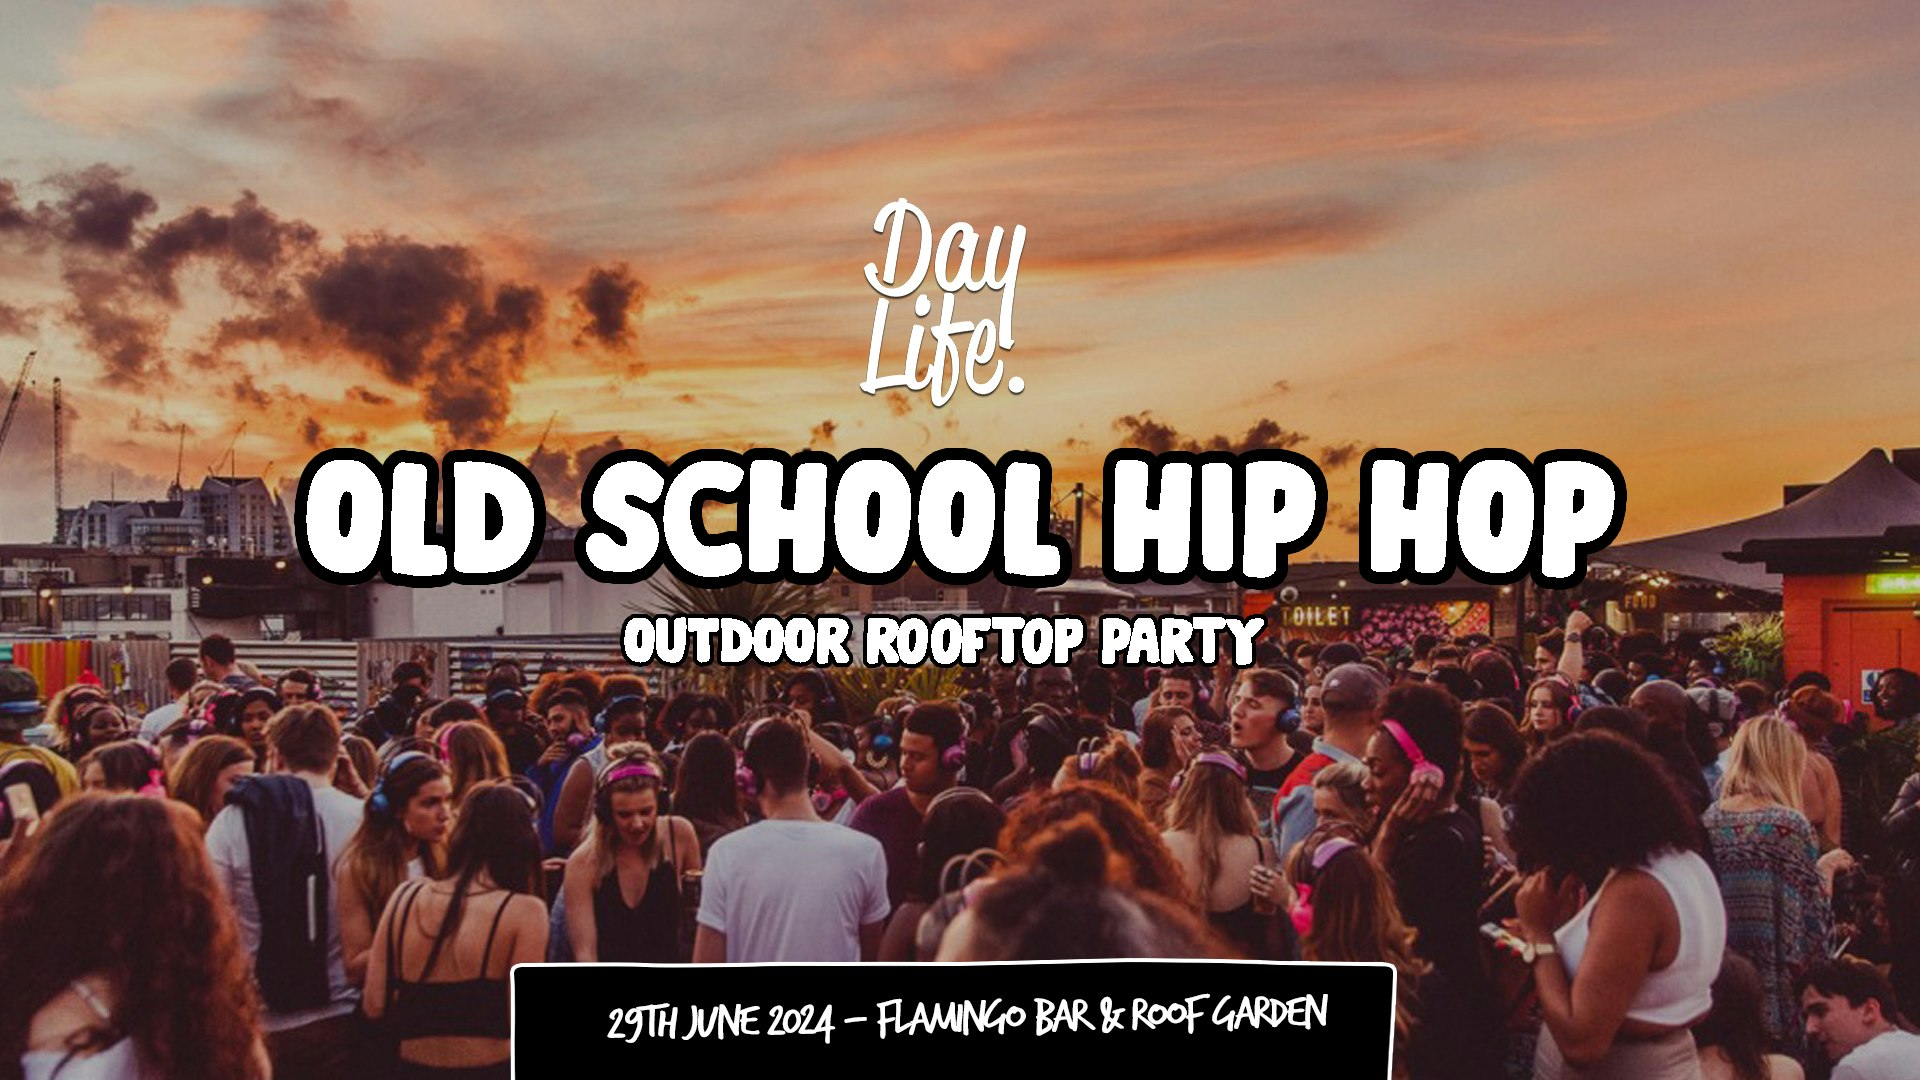 Old School Hip Hop Rooftop Party in Shrewsbury